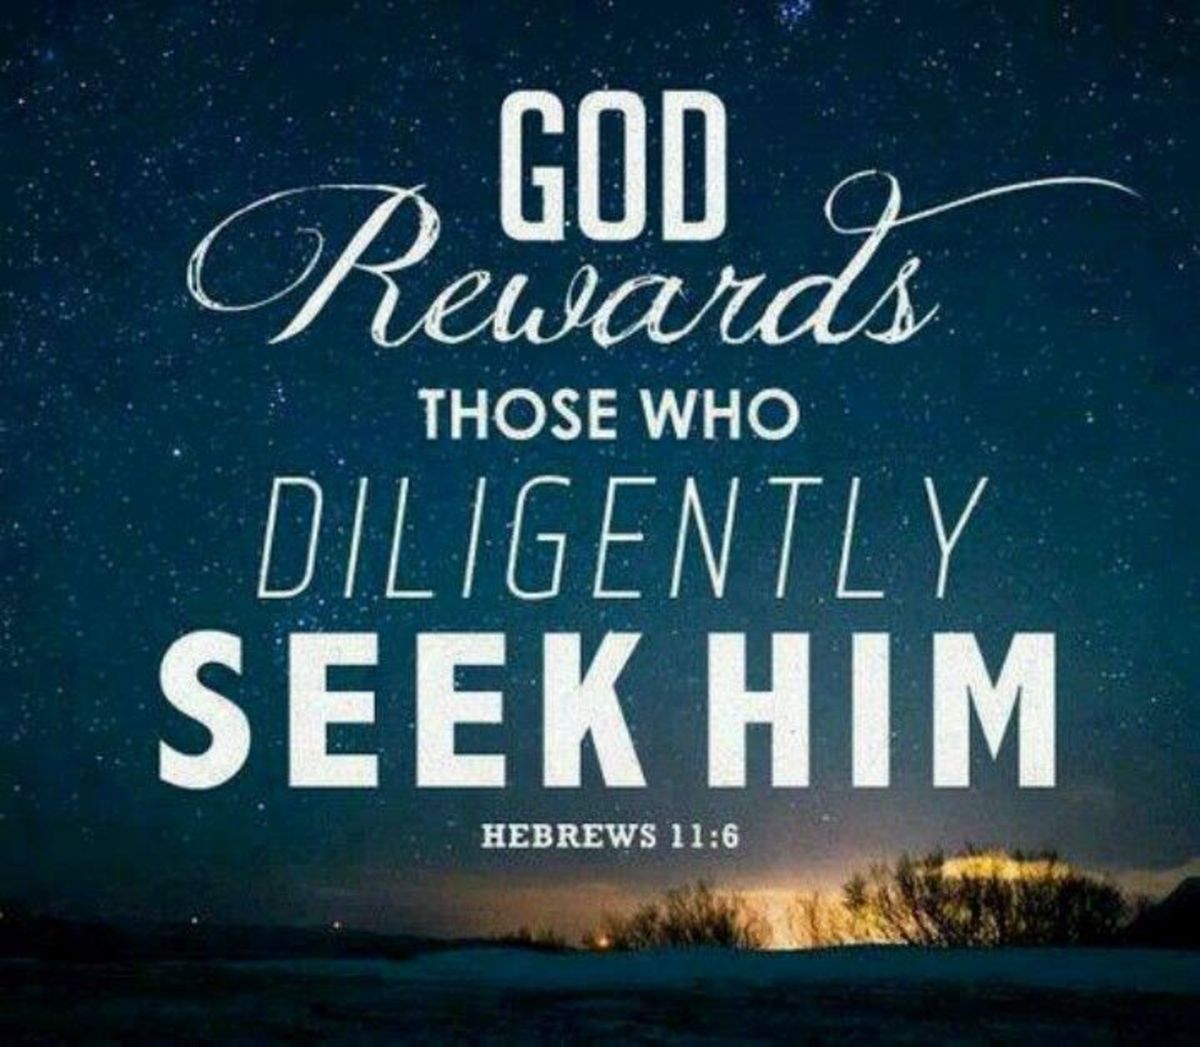 the-life-god-rewards-diligently-seeking-him